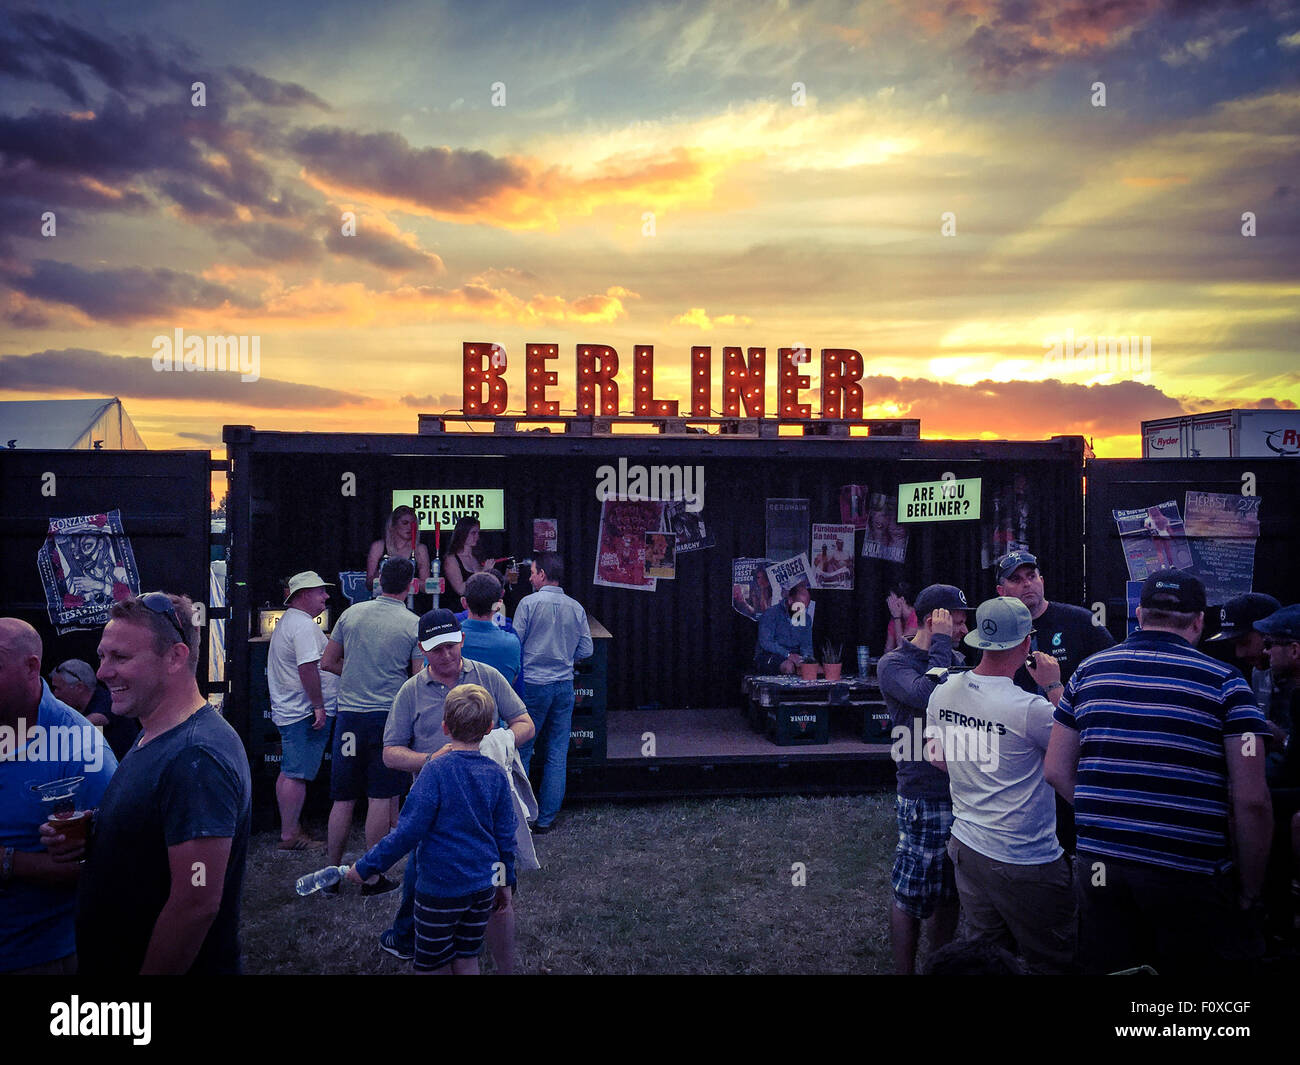 Berliner sign in lights with sky behind, bar serving bier Stock Photo